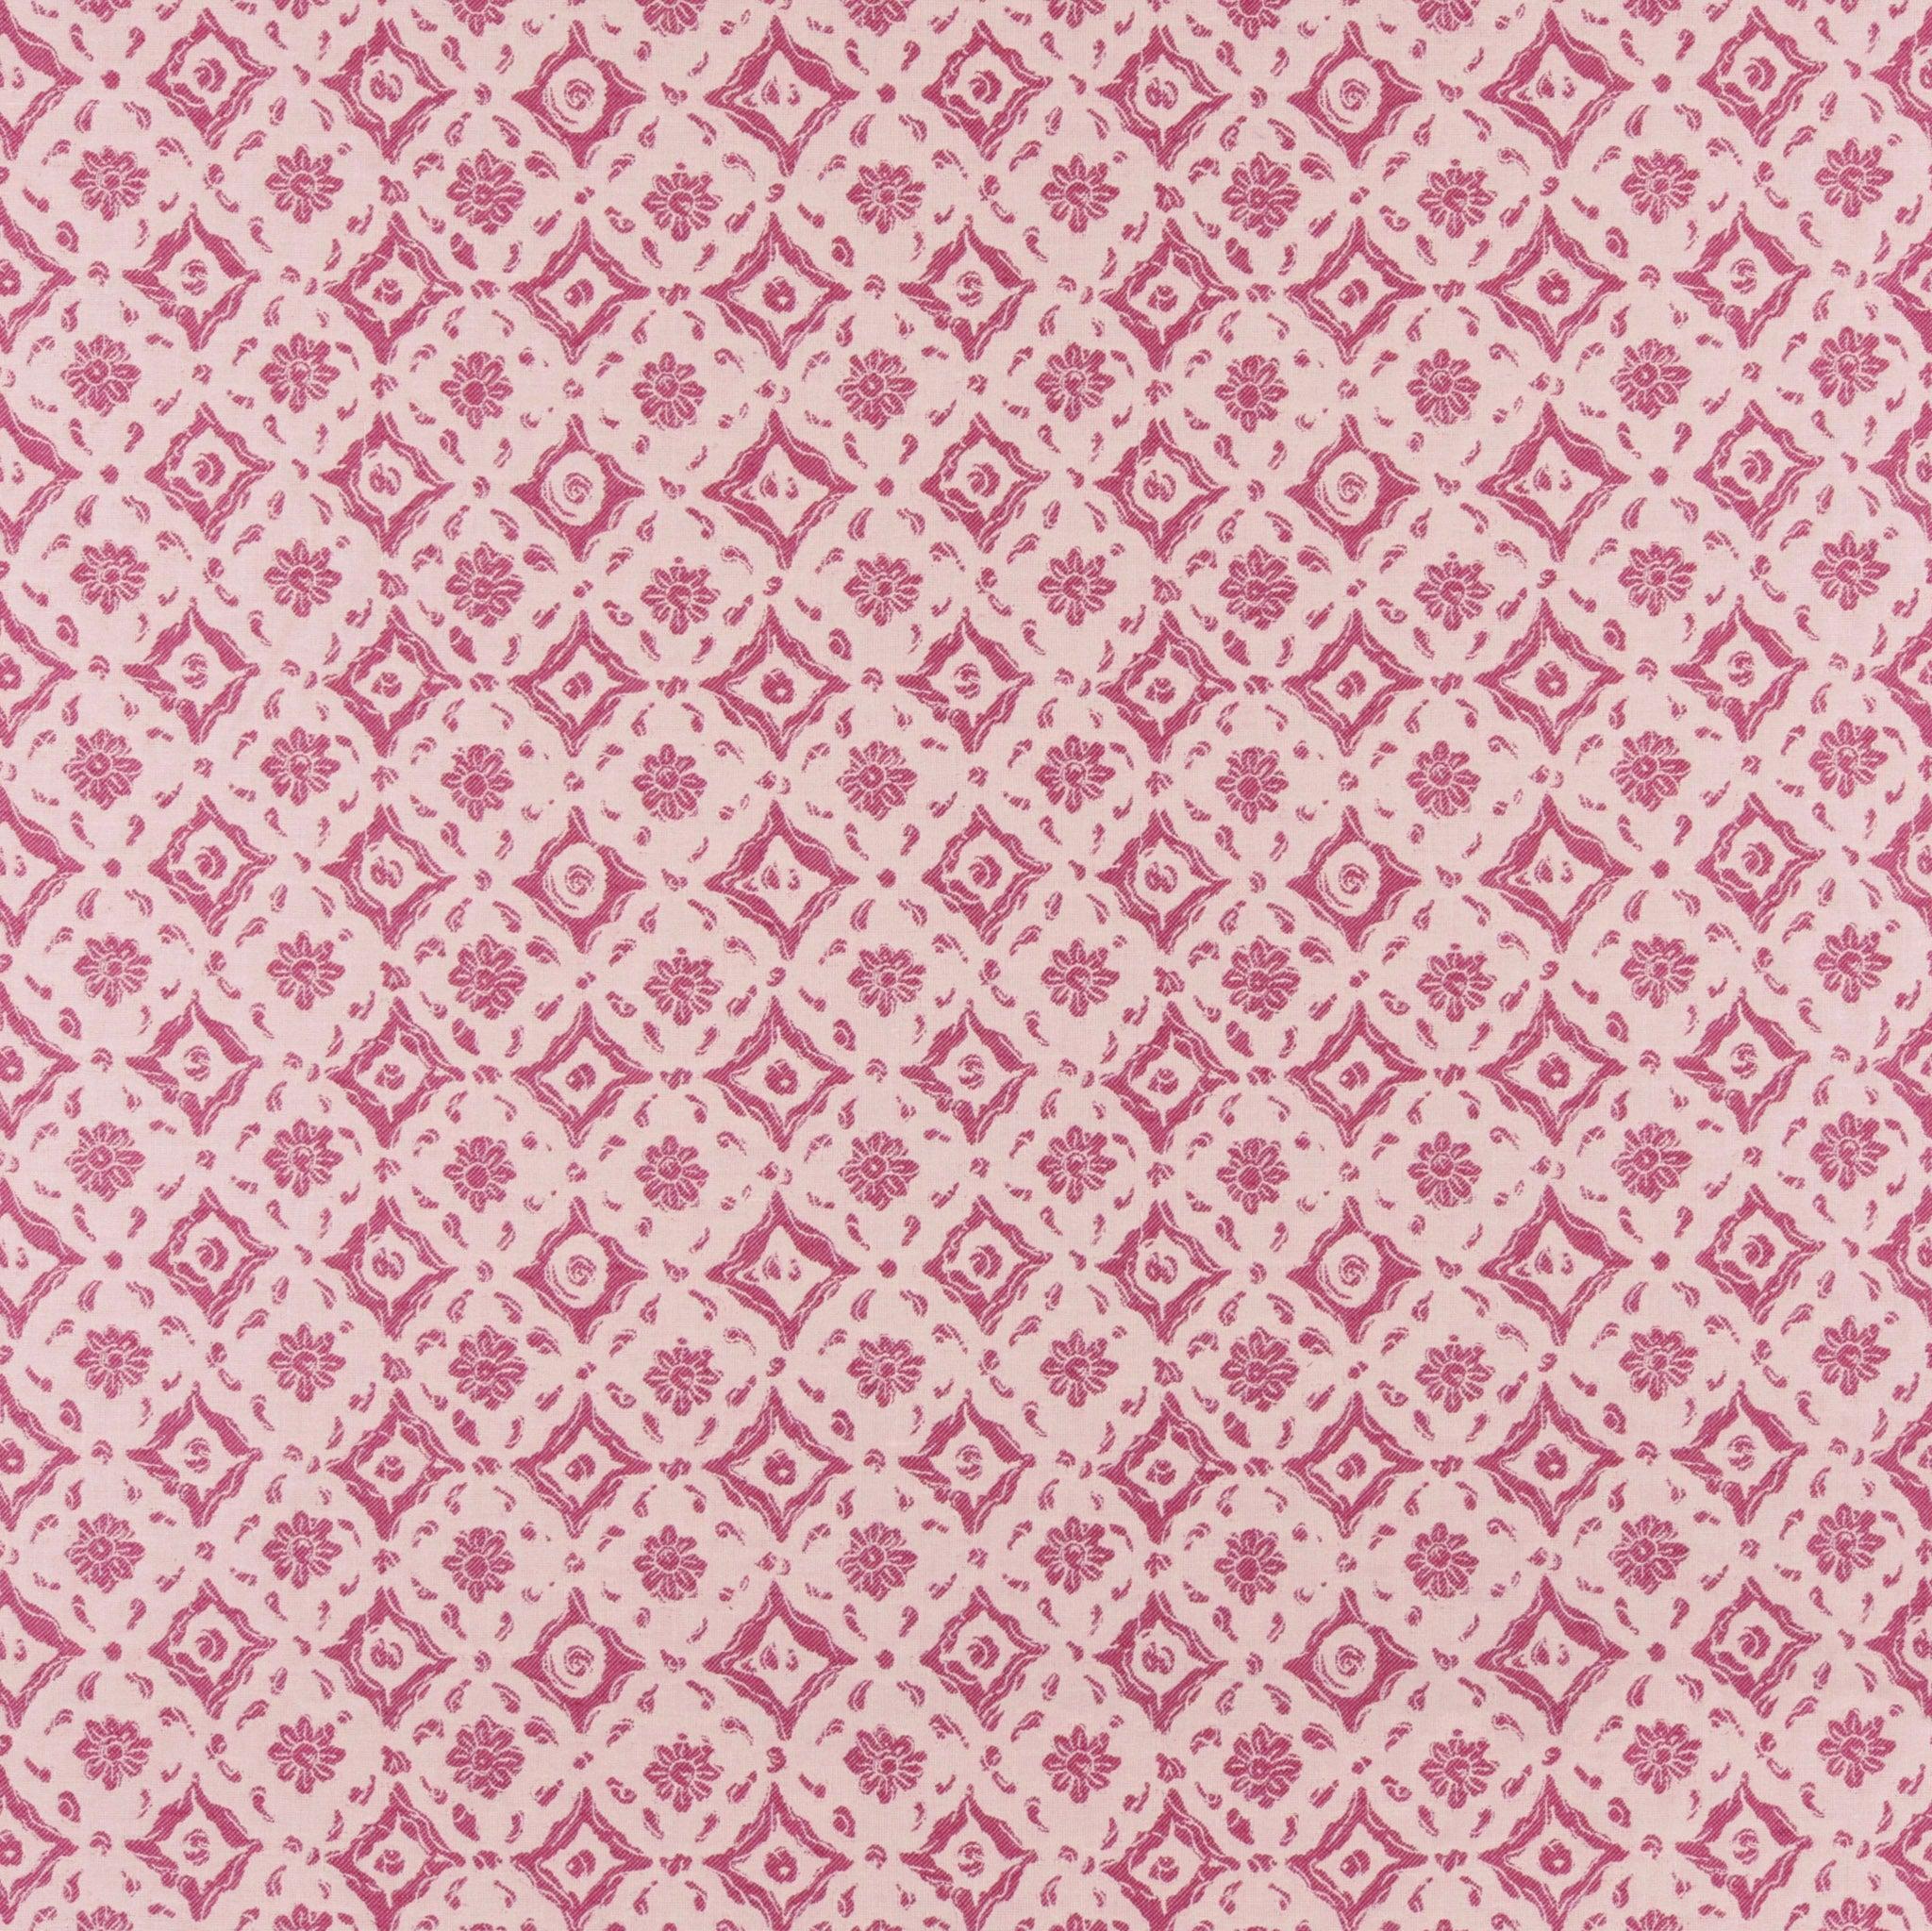 Floral Tile Pink Fabric Penny Morrison